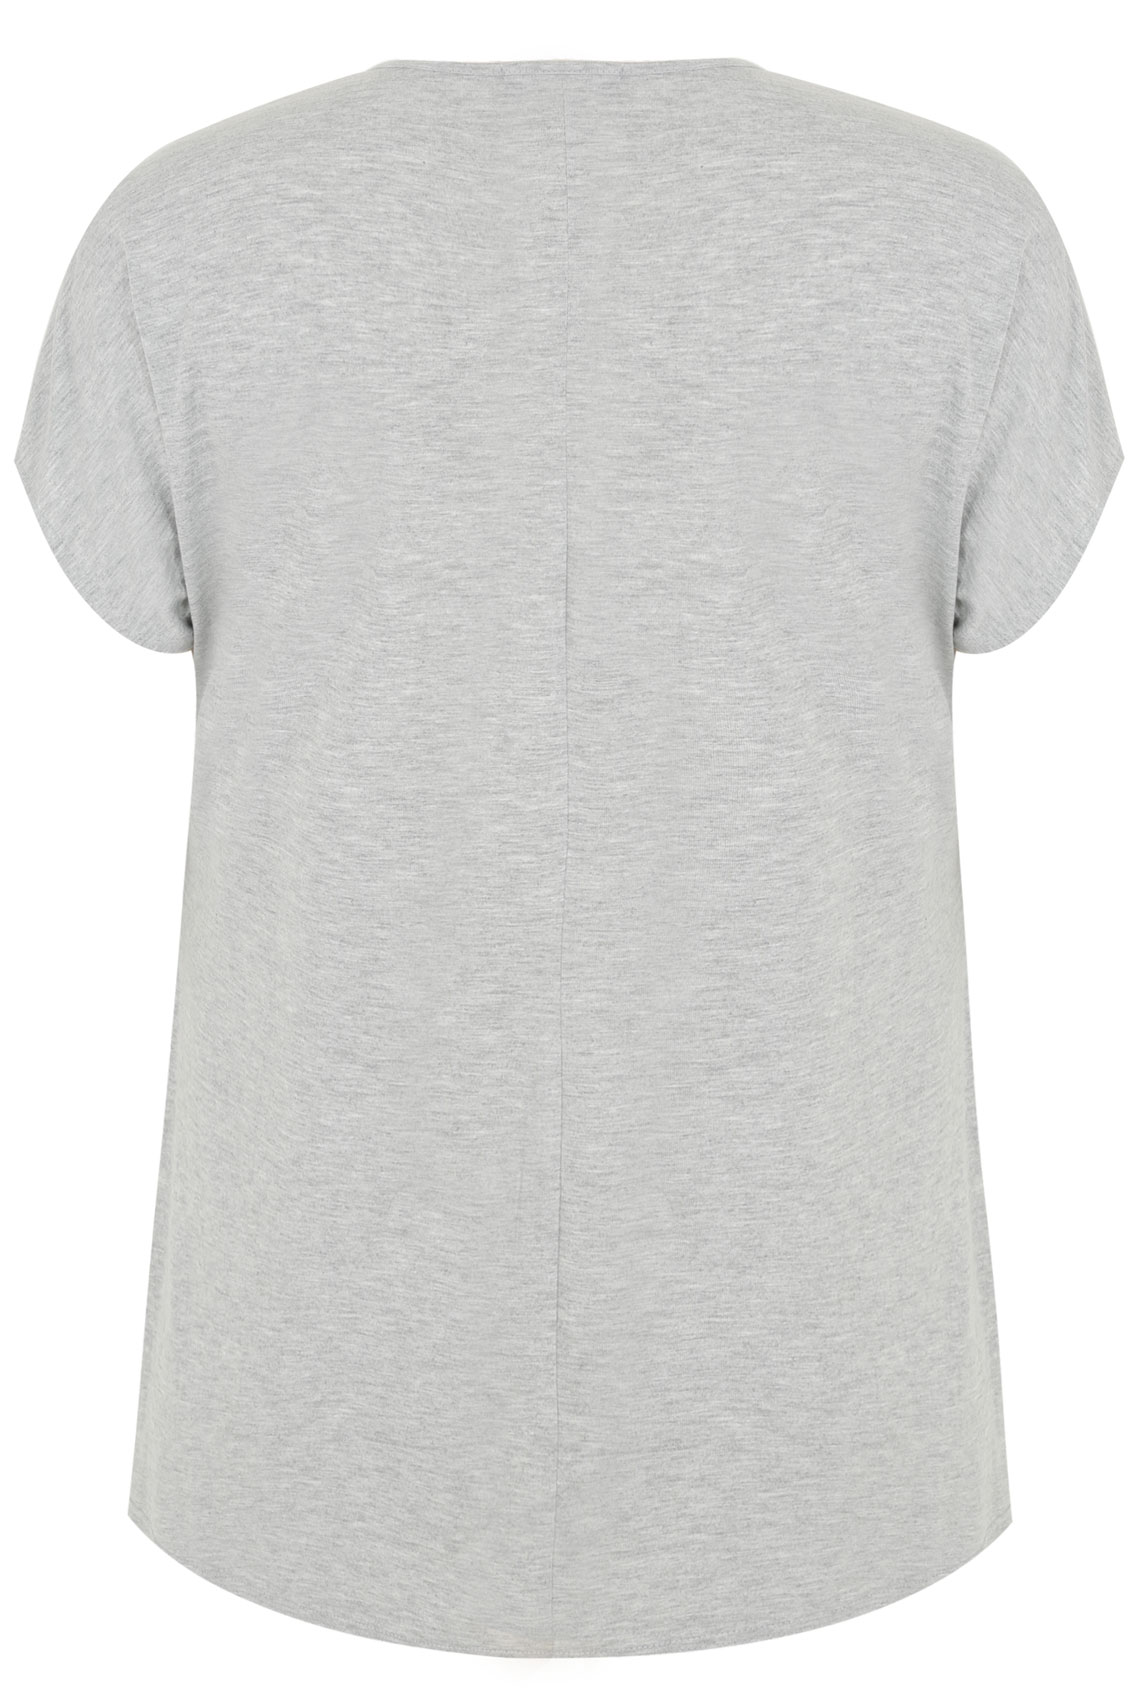 Grey Twin Bird Print Embellished T-Shirt, Plus size 16 to 32